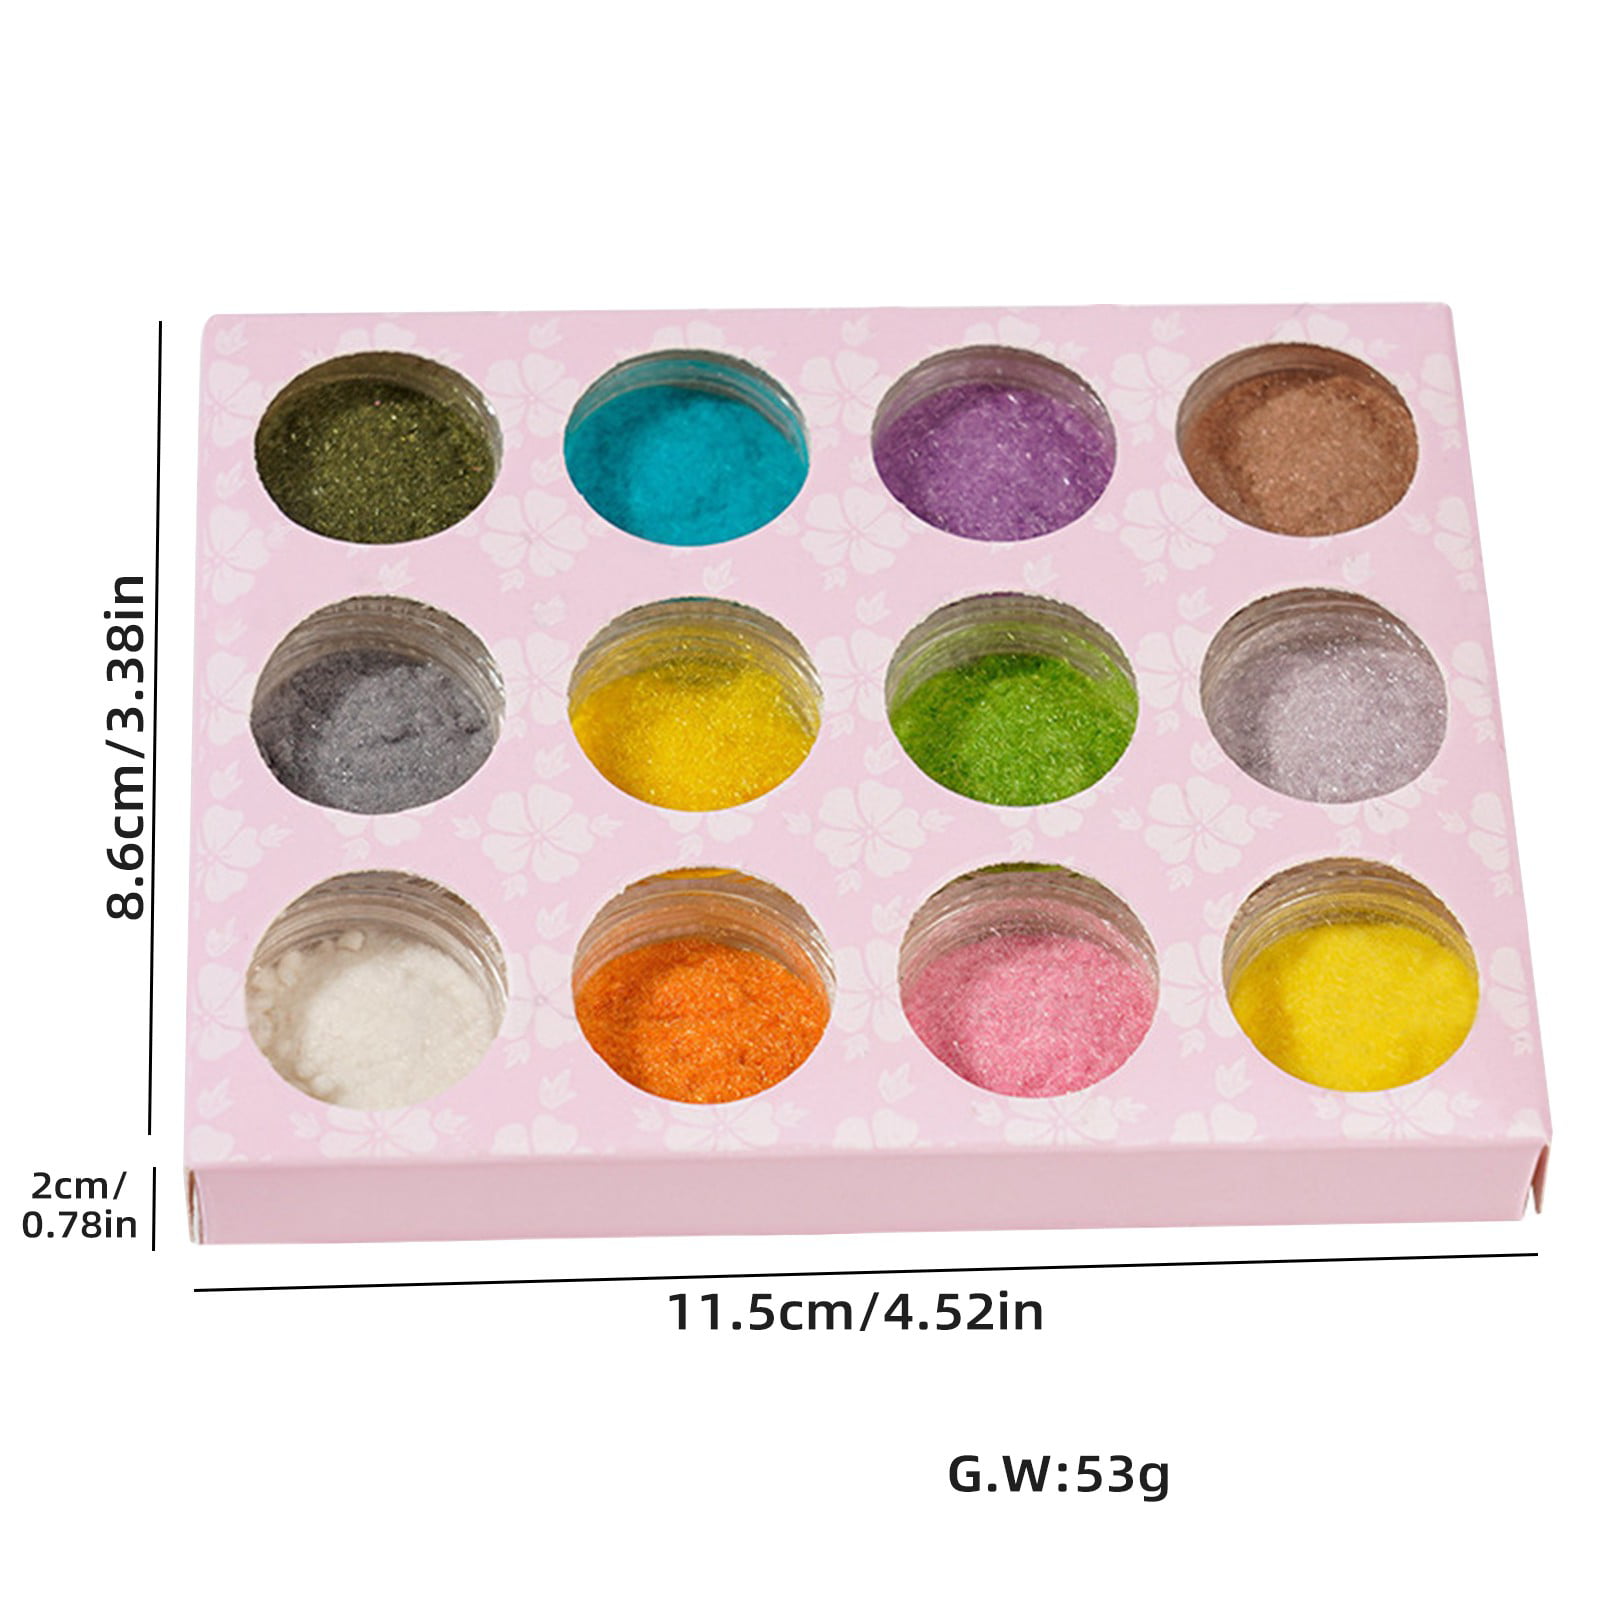 Pjtewawe nail powder 6 colors set nail powder loose pastel foil